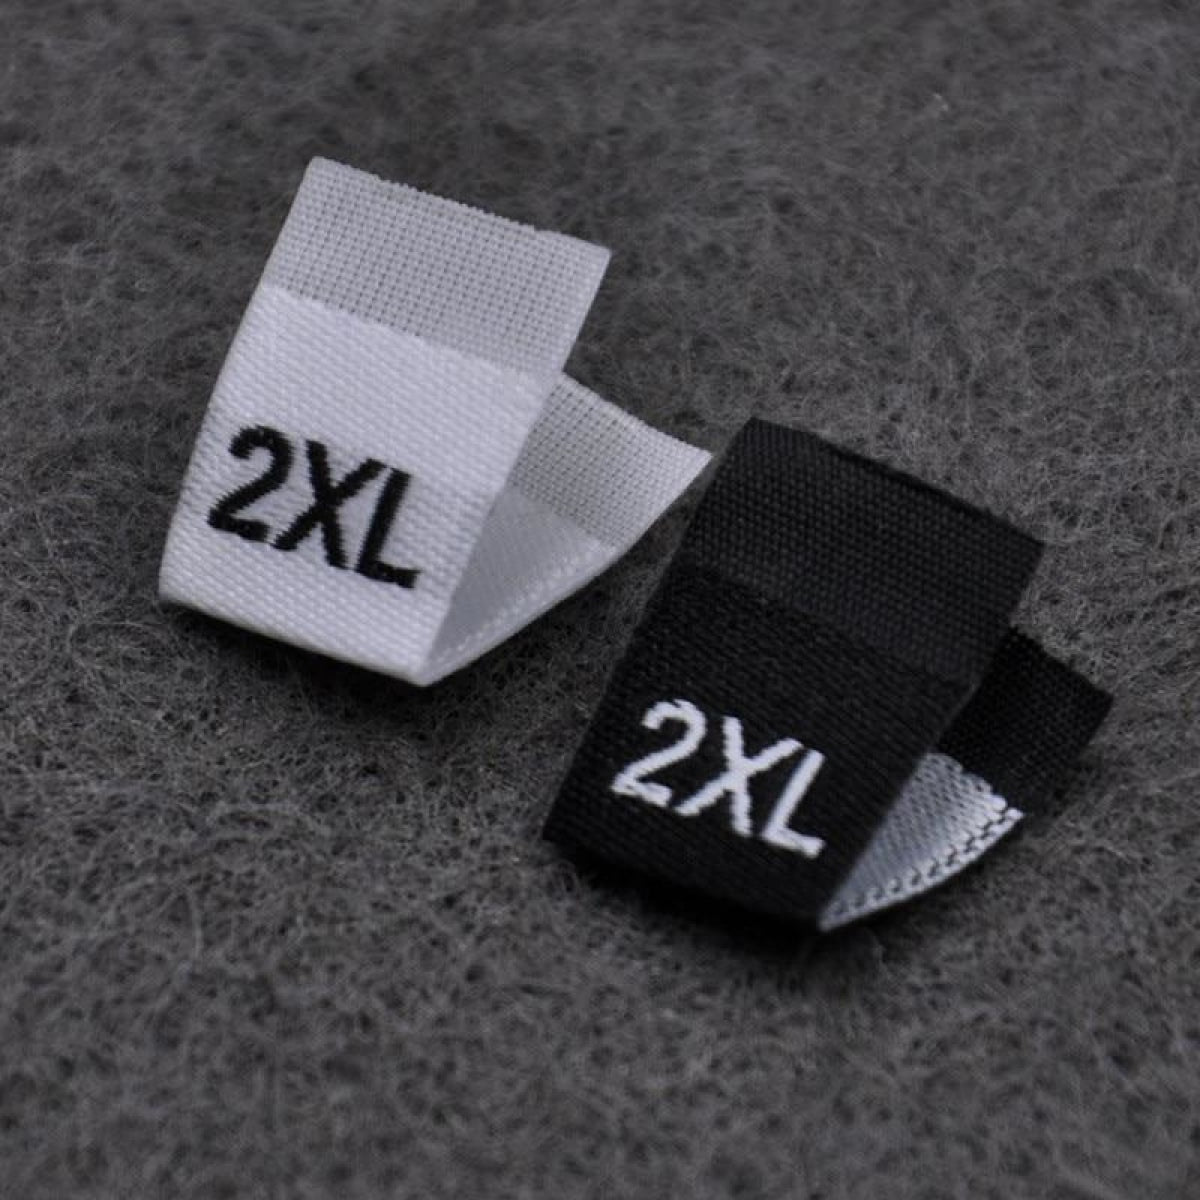 10-100pcs Clothing Size Label Tags XS S M L XL 2XL 3XL 4XL Black Text White Garment Clothes T Shirt Dress Fabric - 2XL Black - - Asia Sell